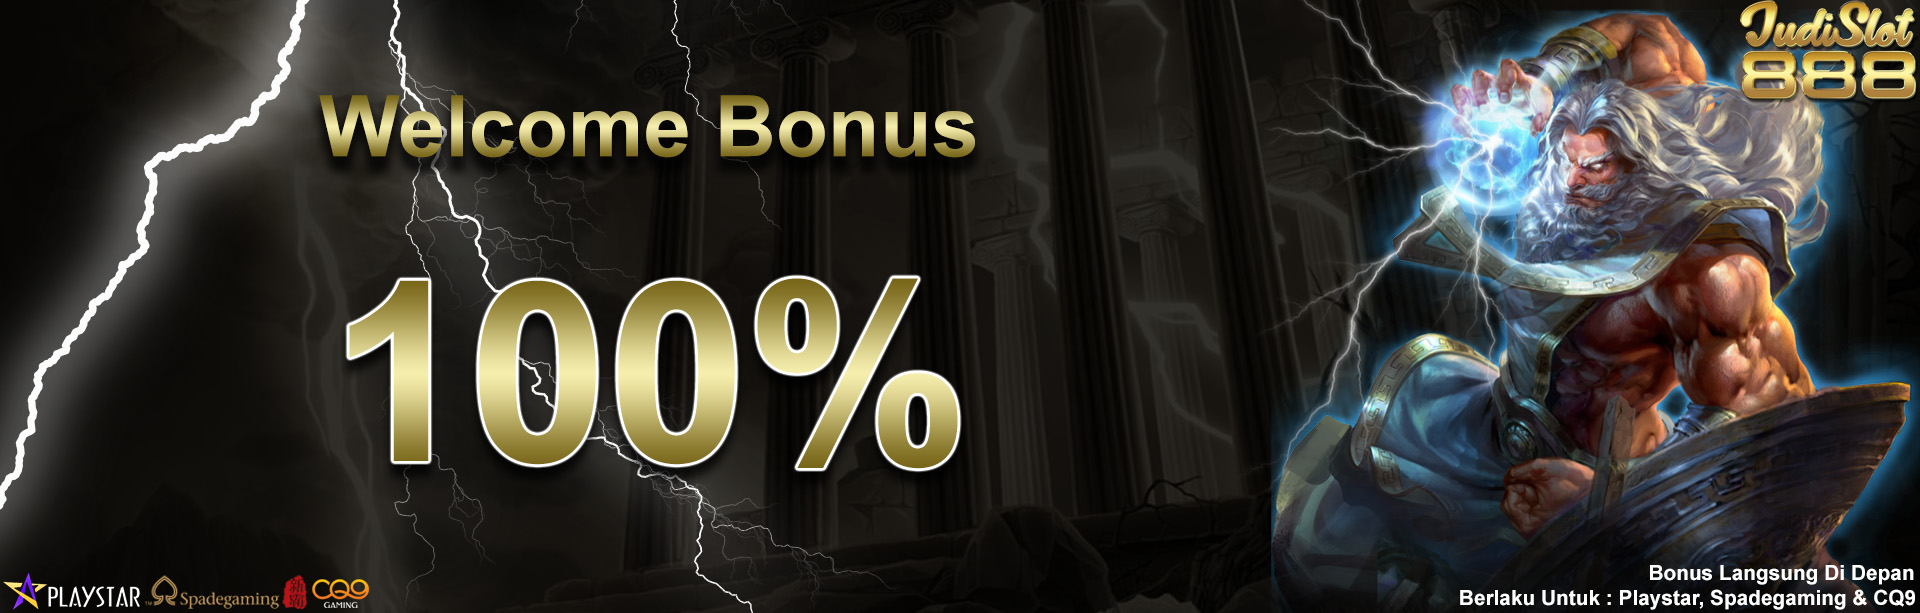 Welcome Bonus 100% Slot Game 888